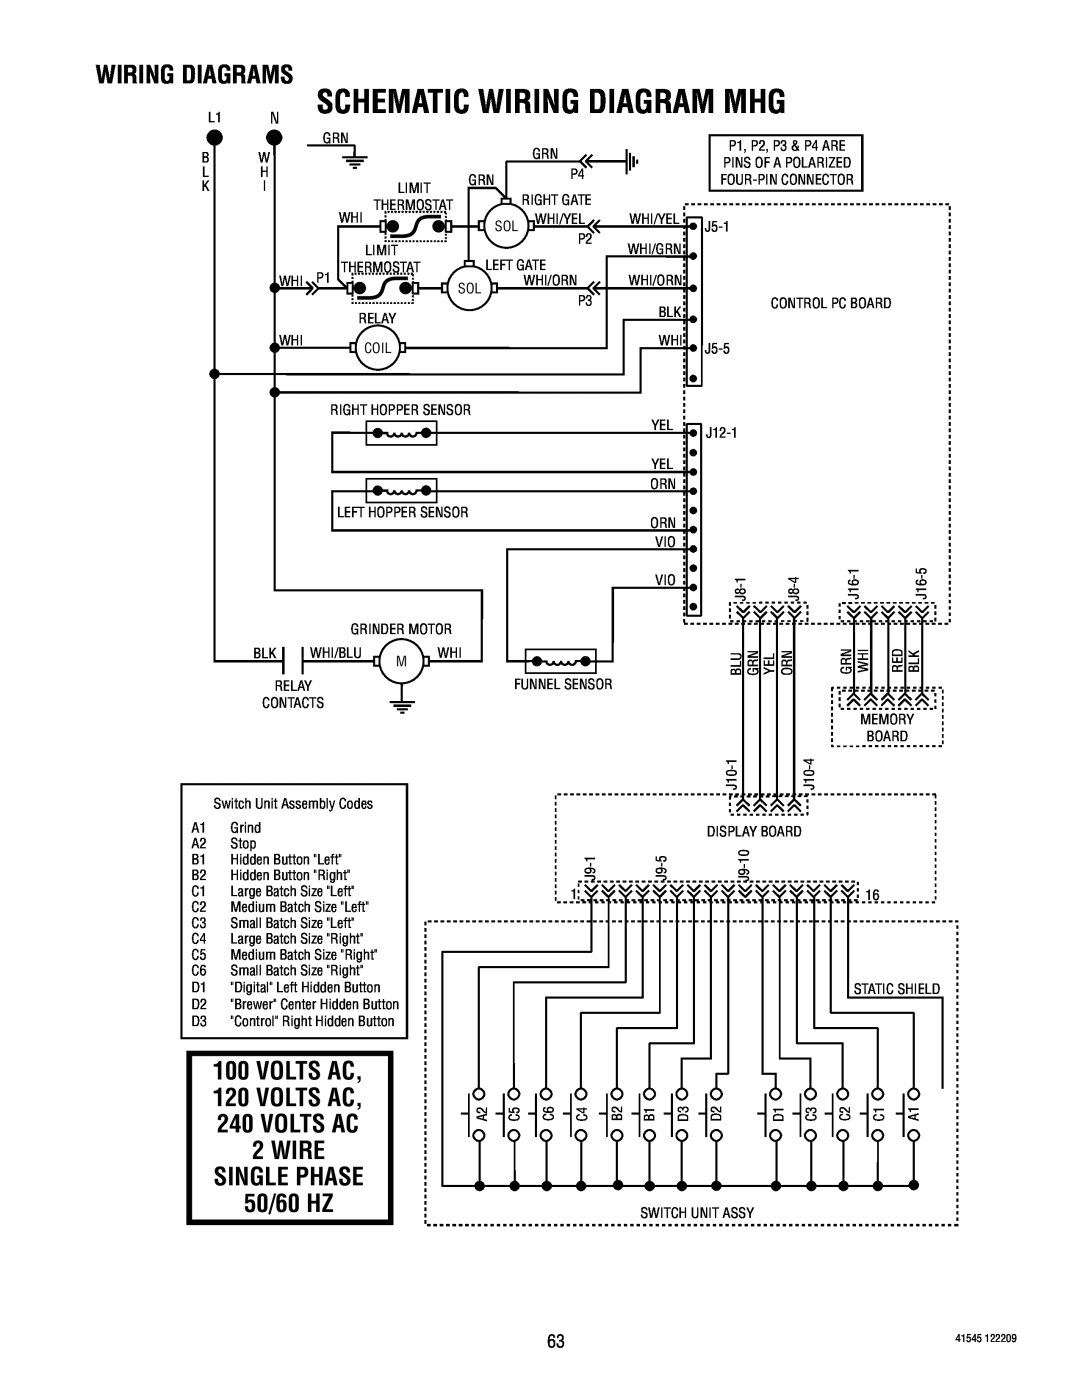 Bunn FPG-2, LPG-2, G9WD, G9-2T DBC Wire Single Phase, 50/60 HZ, Schematic Wiring Diagram Mhg, Wiring Diagrams, Volts Ac 